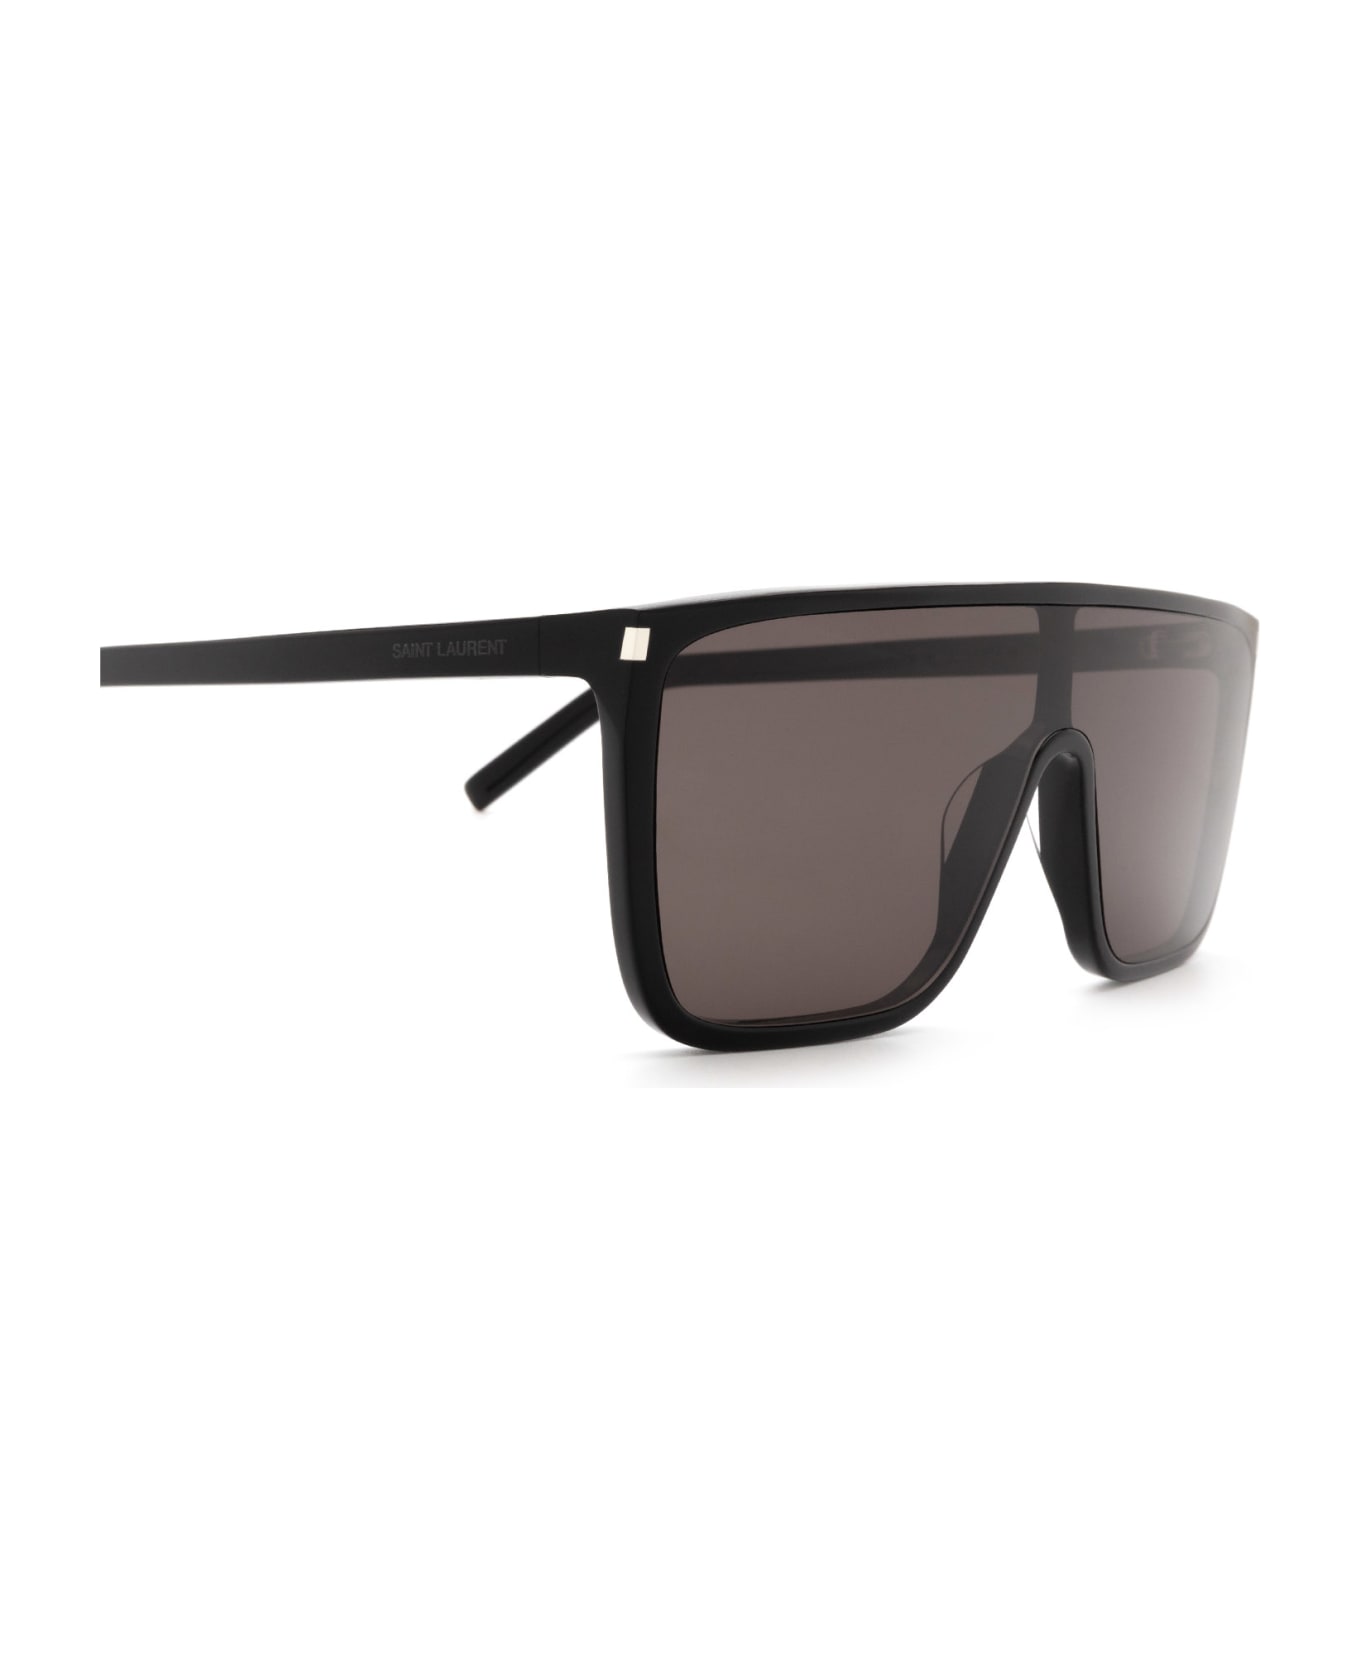 Saint Laurent Eyewear Sl 364 Mask Ace Black Sunglasses gucci - Black